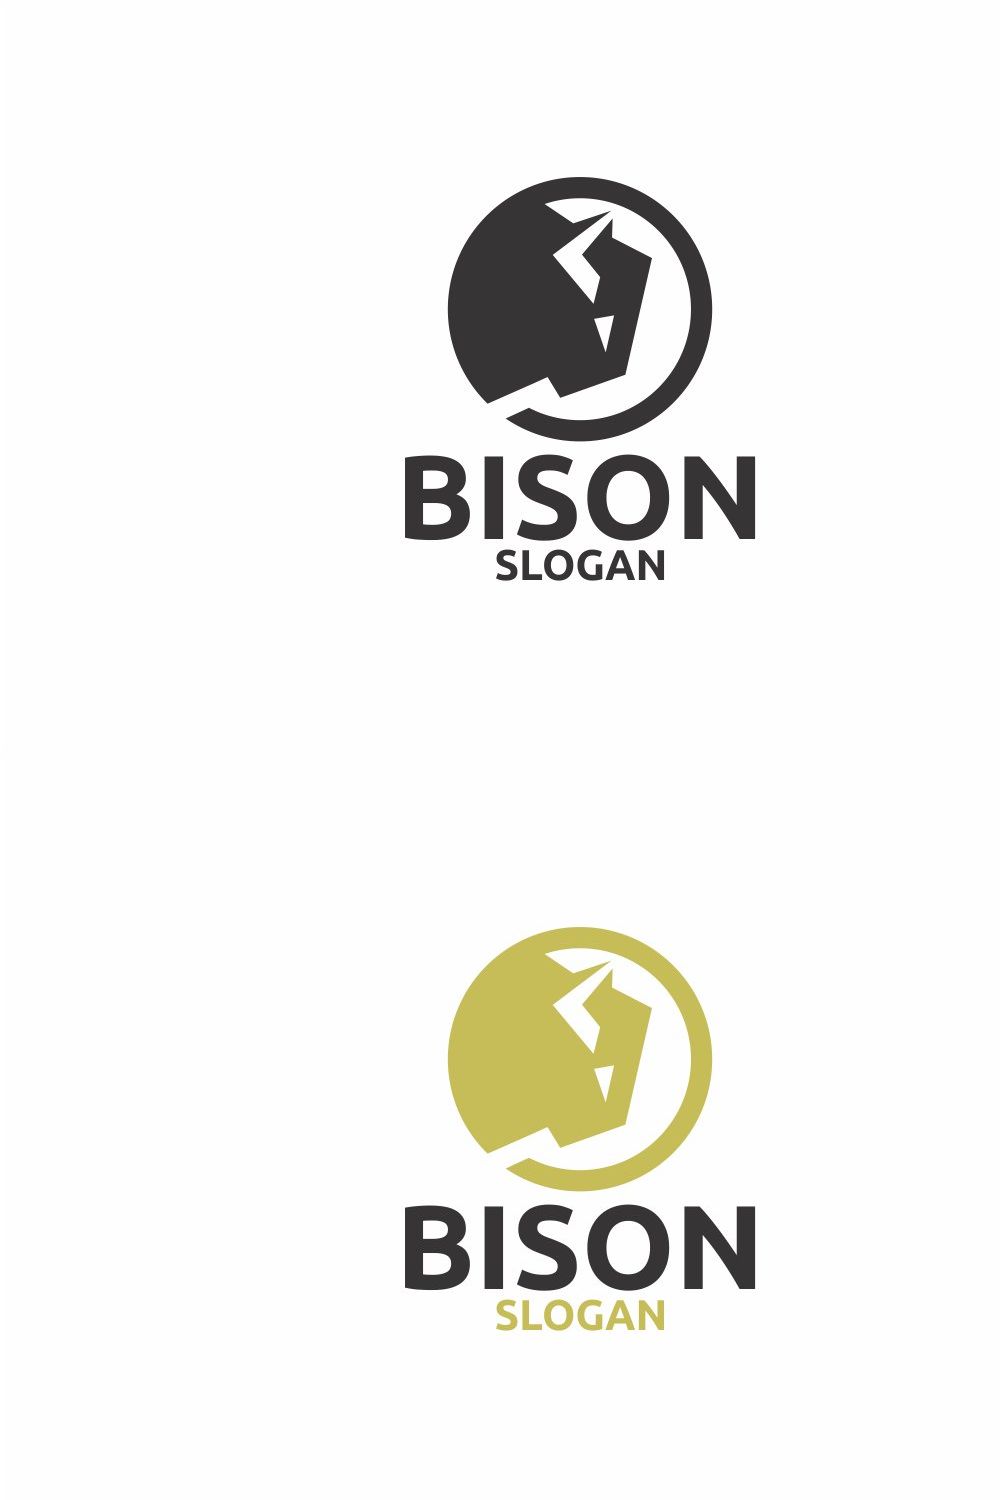 Bison Logo pinterest preview image.